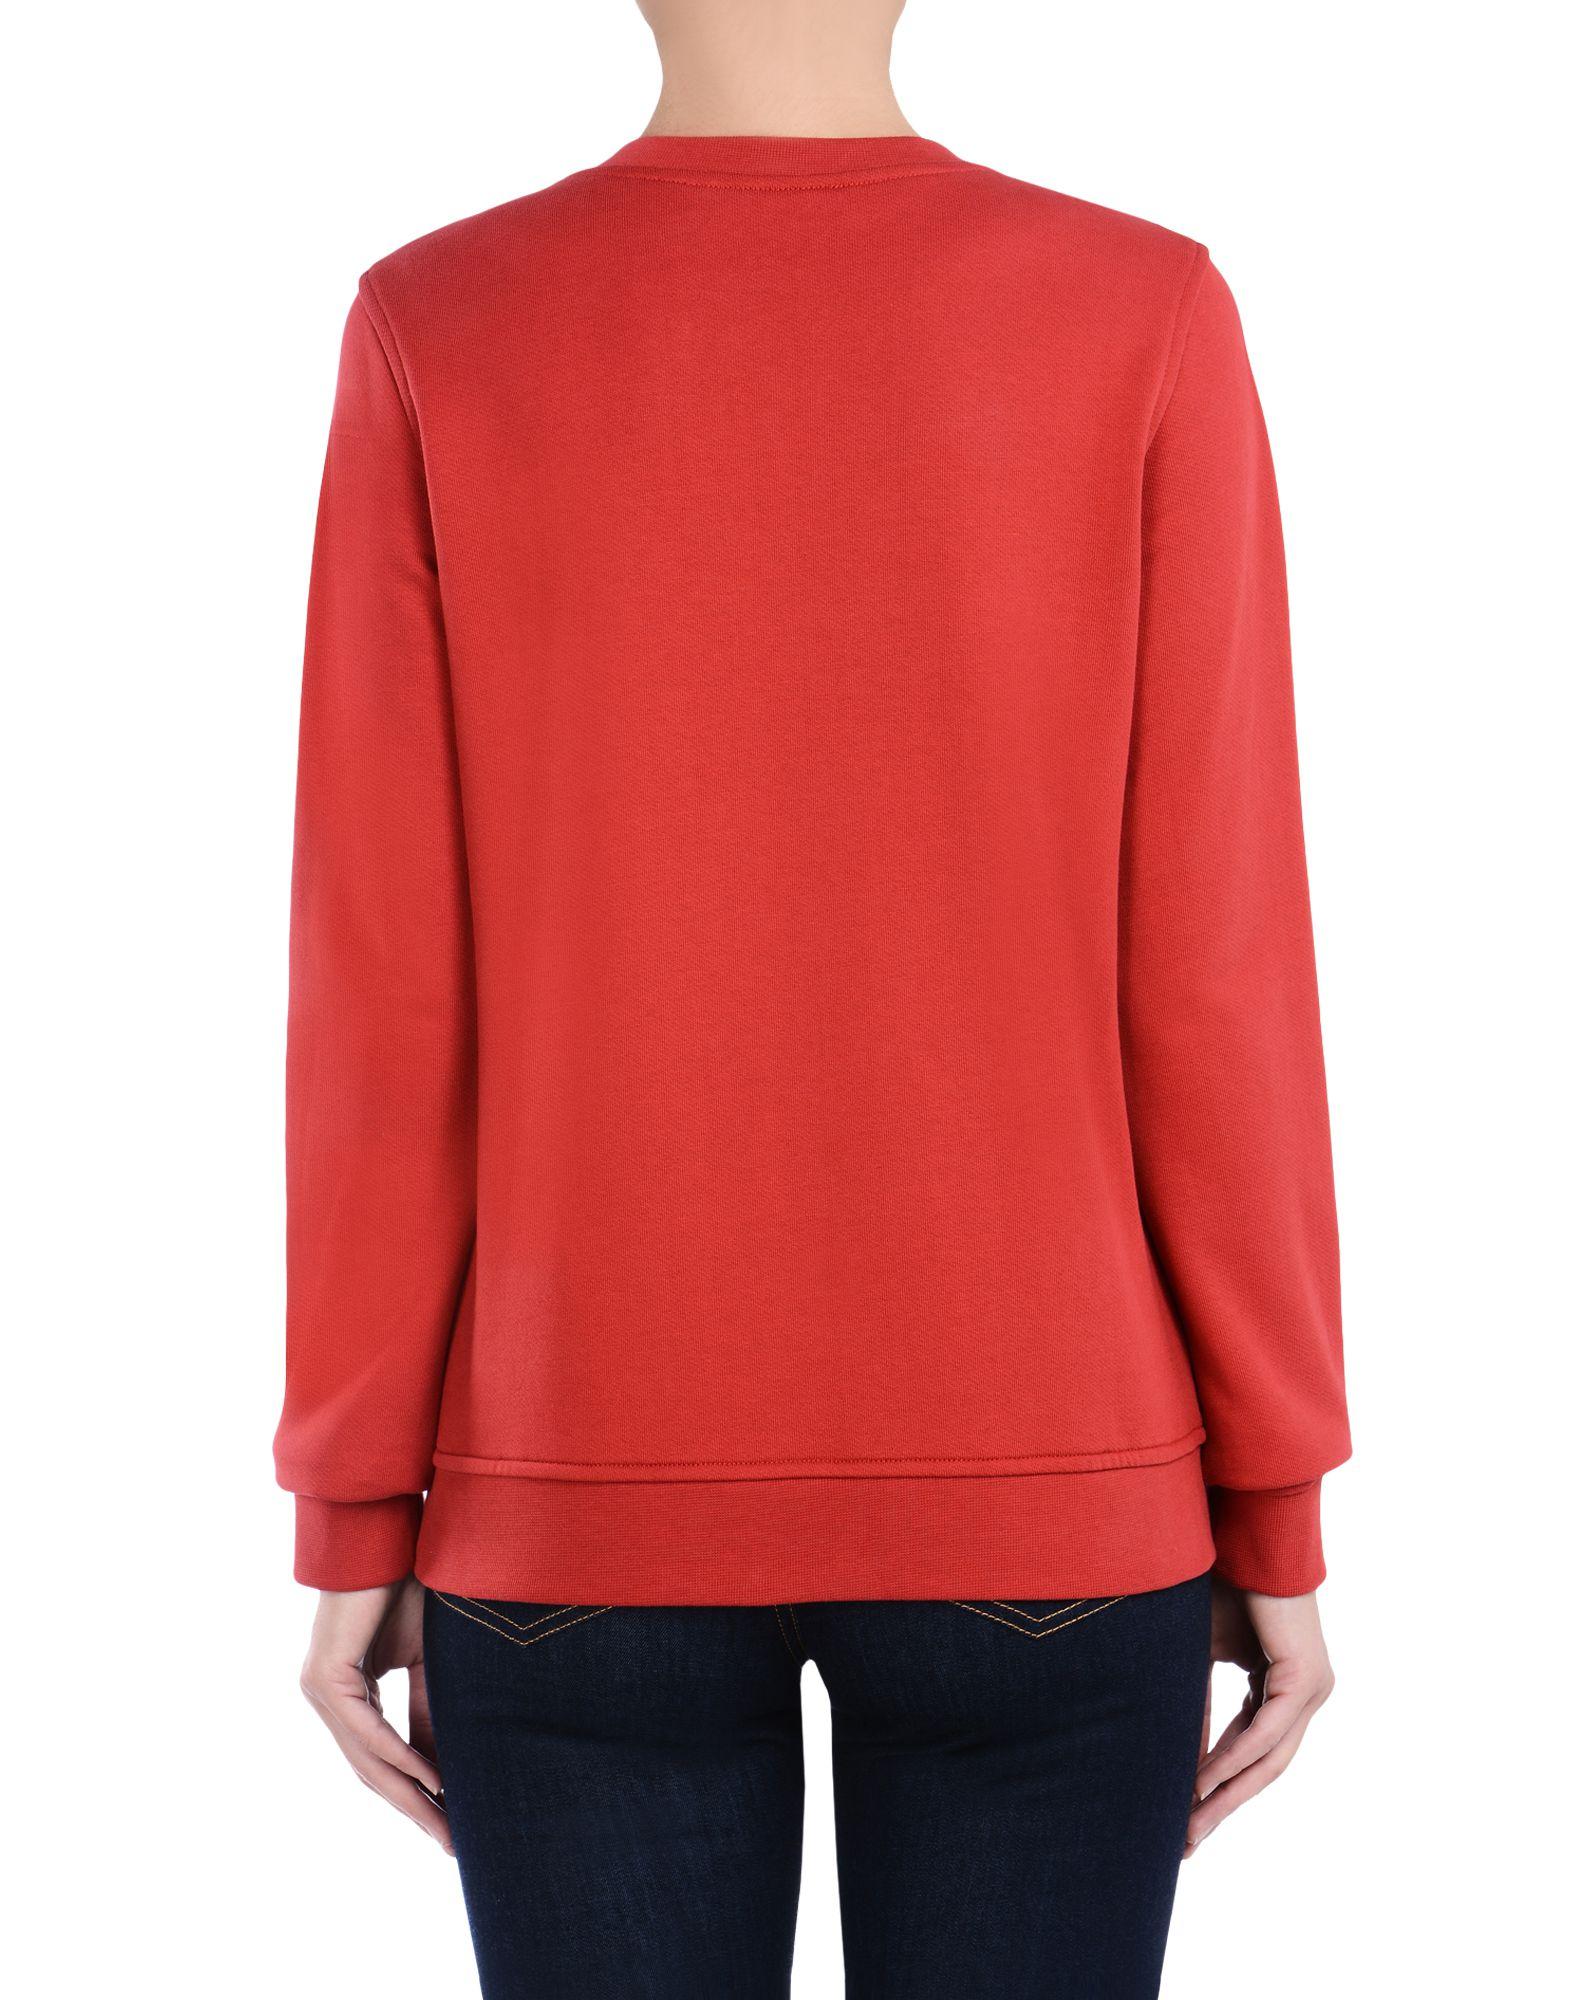 Lyst - Love Moschino Sweatshirt in Red